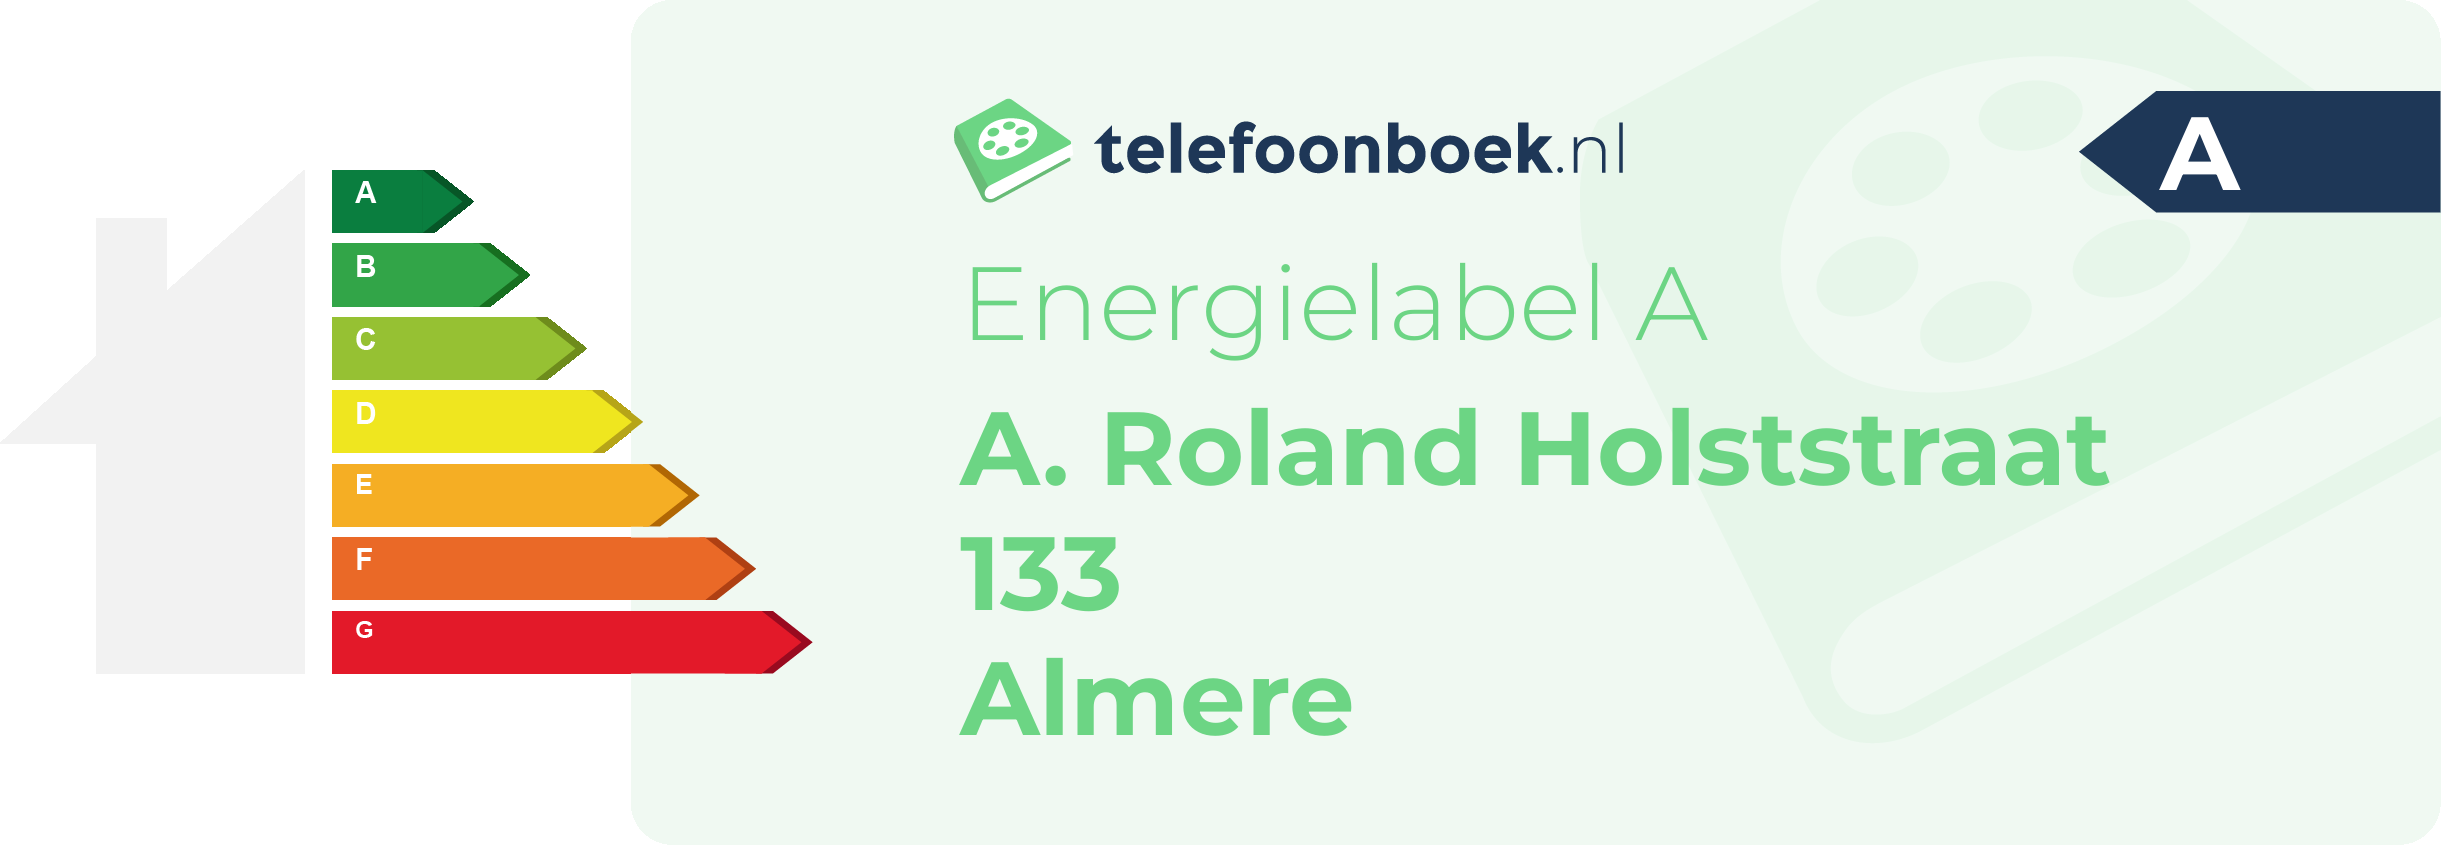 Energielabel A. Roland Holststraat 133 Almere